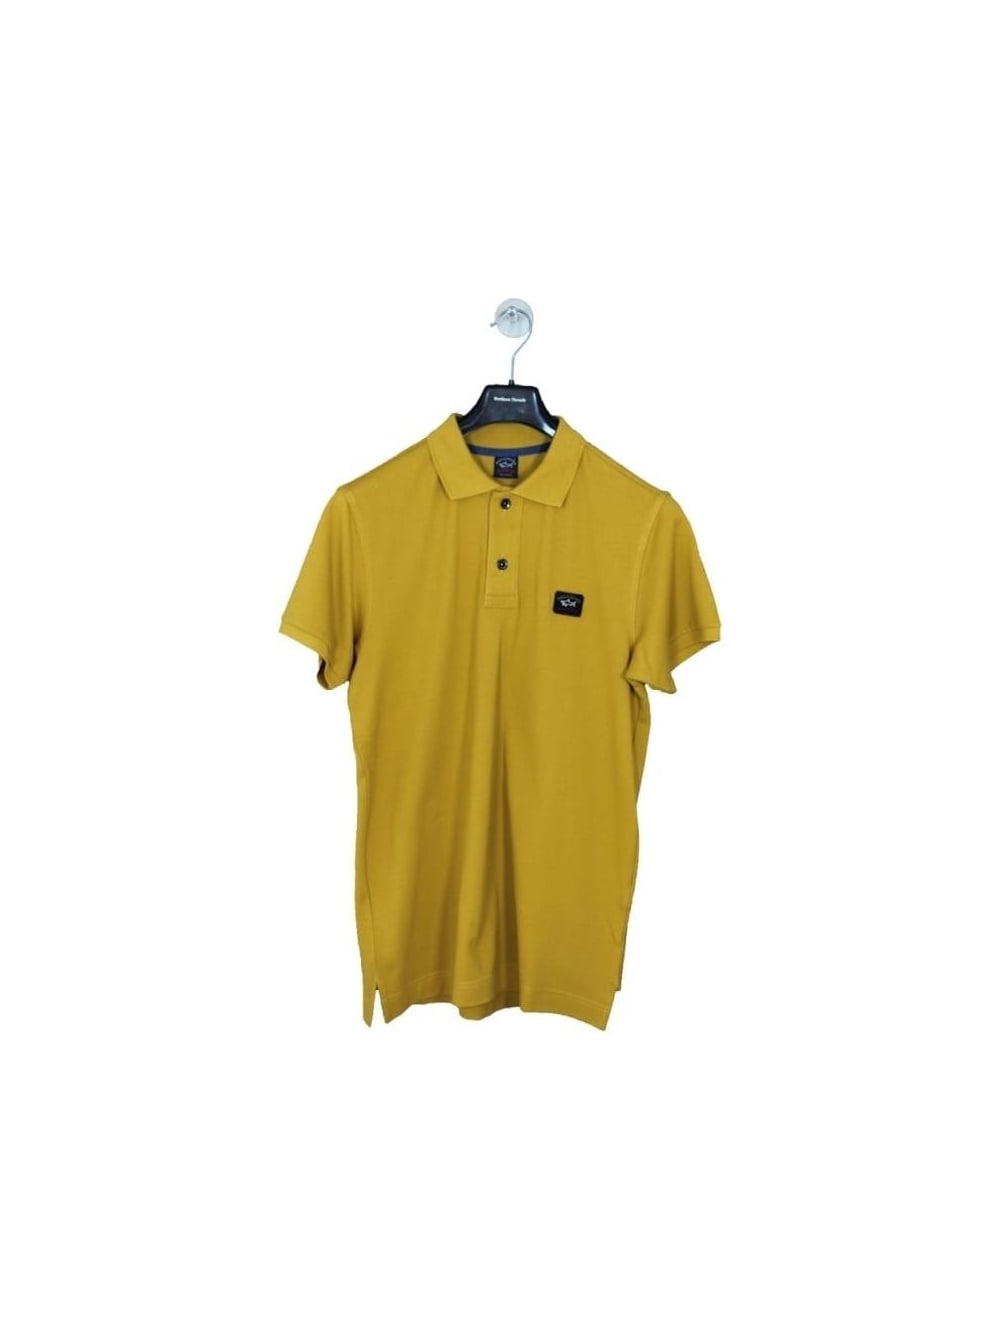 Gold Polo Logo - Paul & Shark Classic Logo Short Sleeve Polo in Gold - Northern Threads